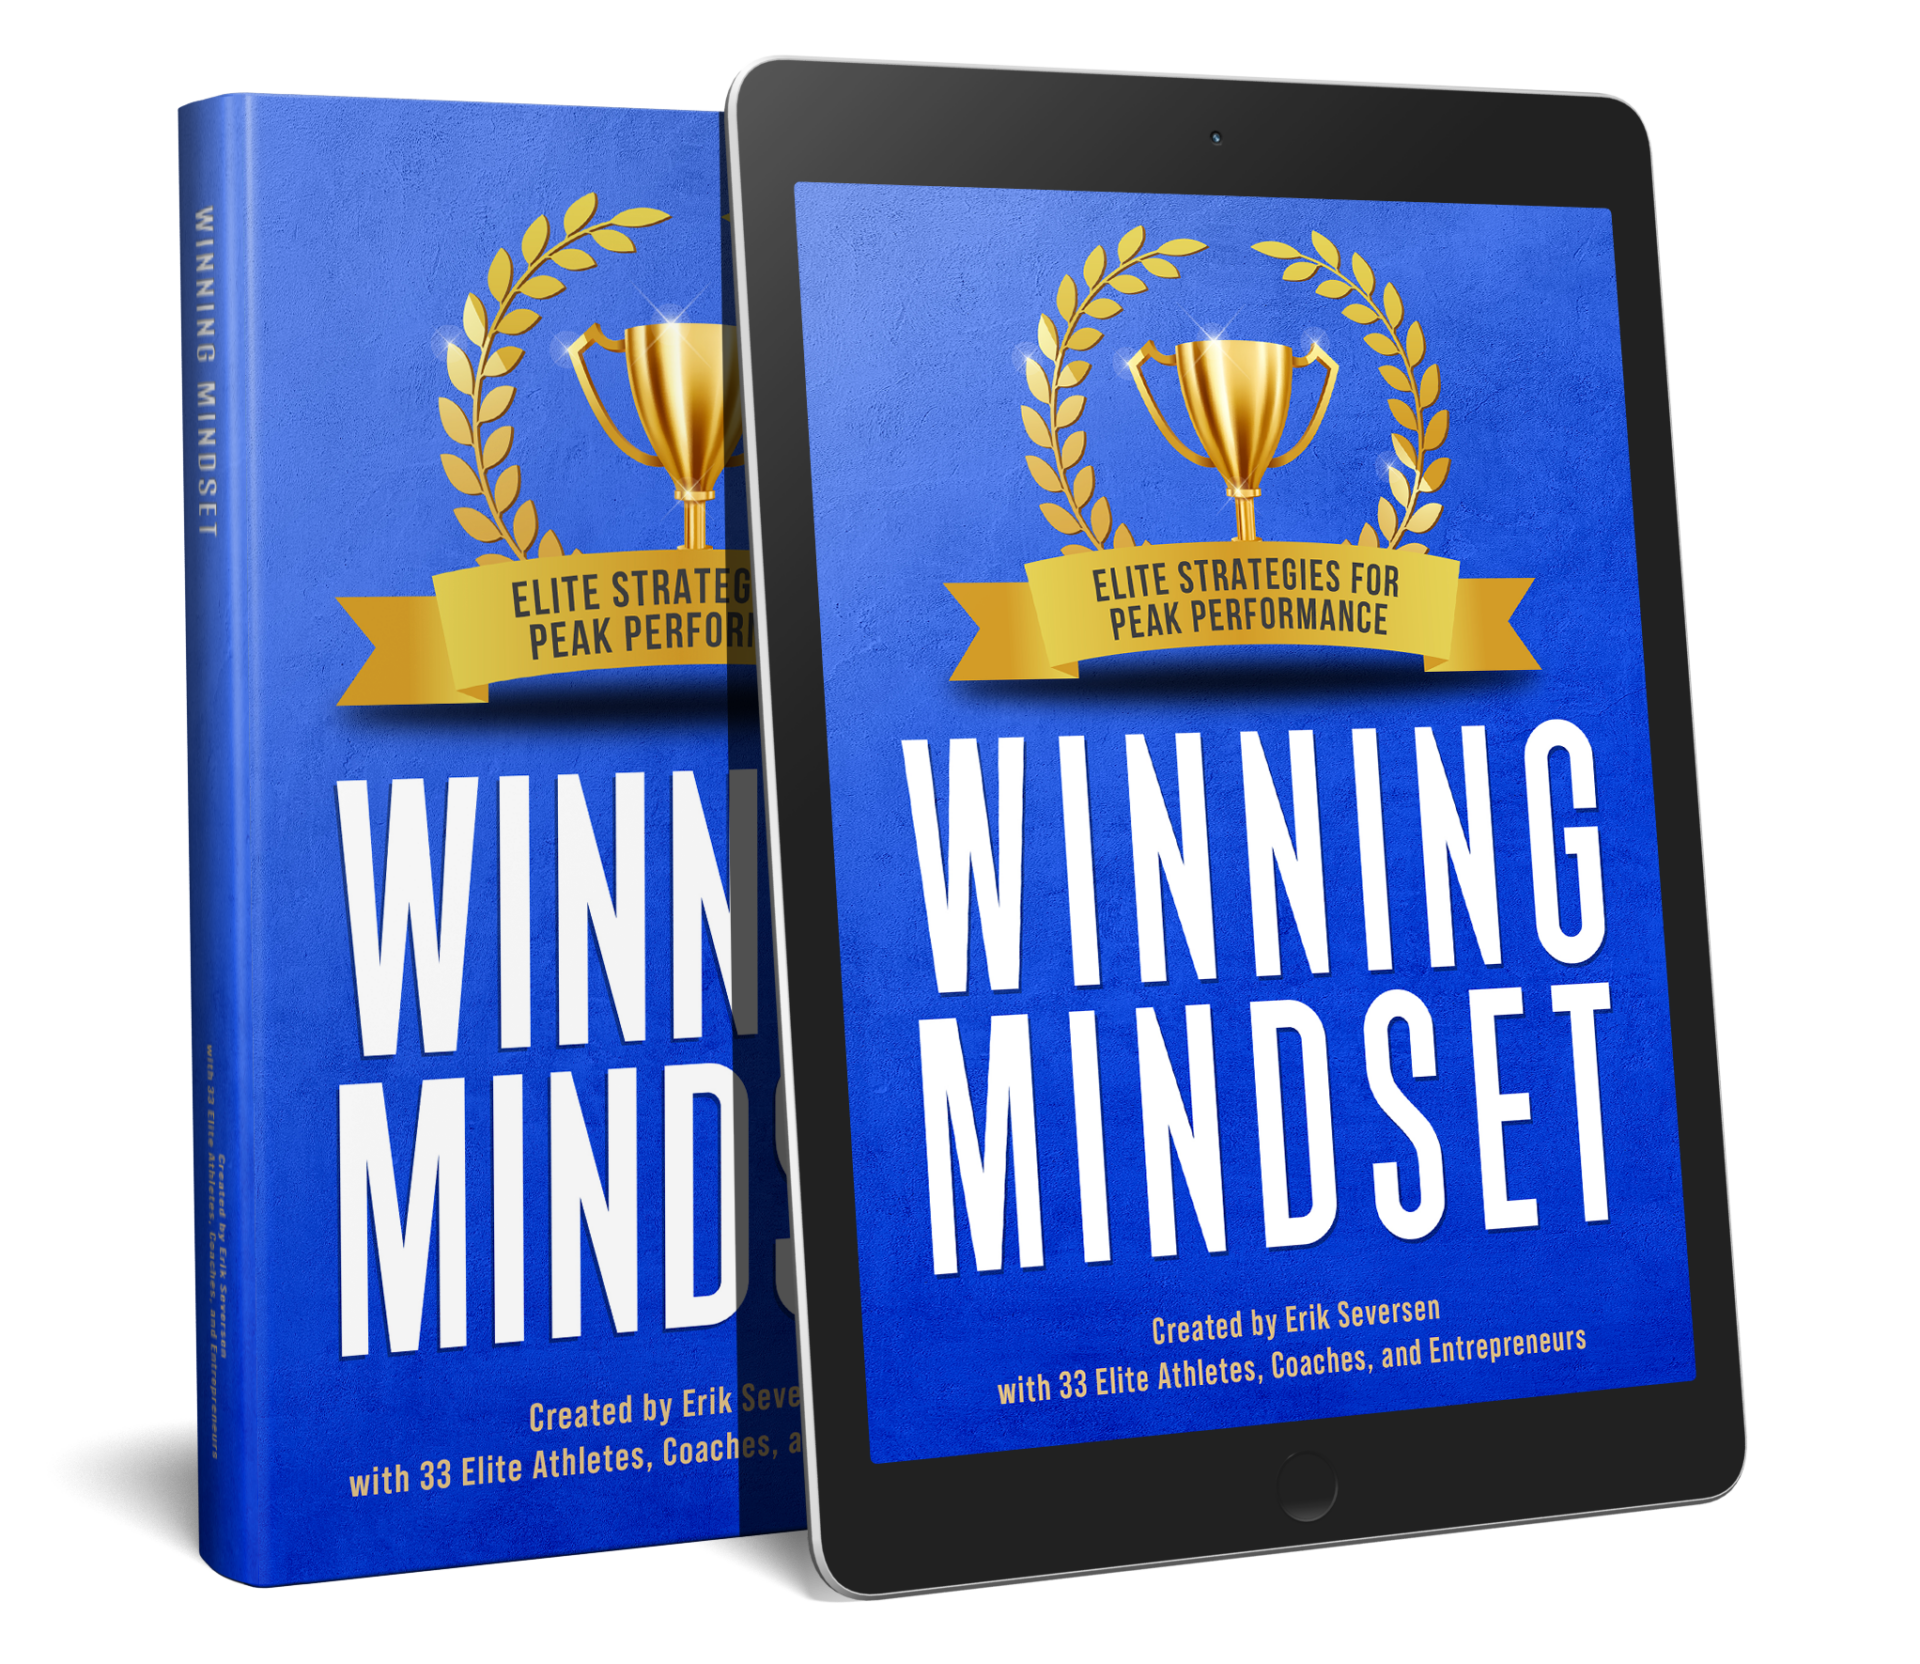 Winning Mindset Book and Peak Performance Strategies